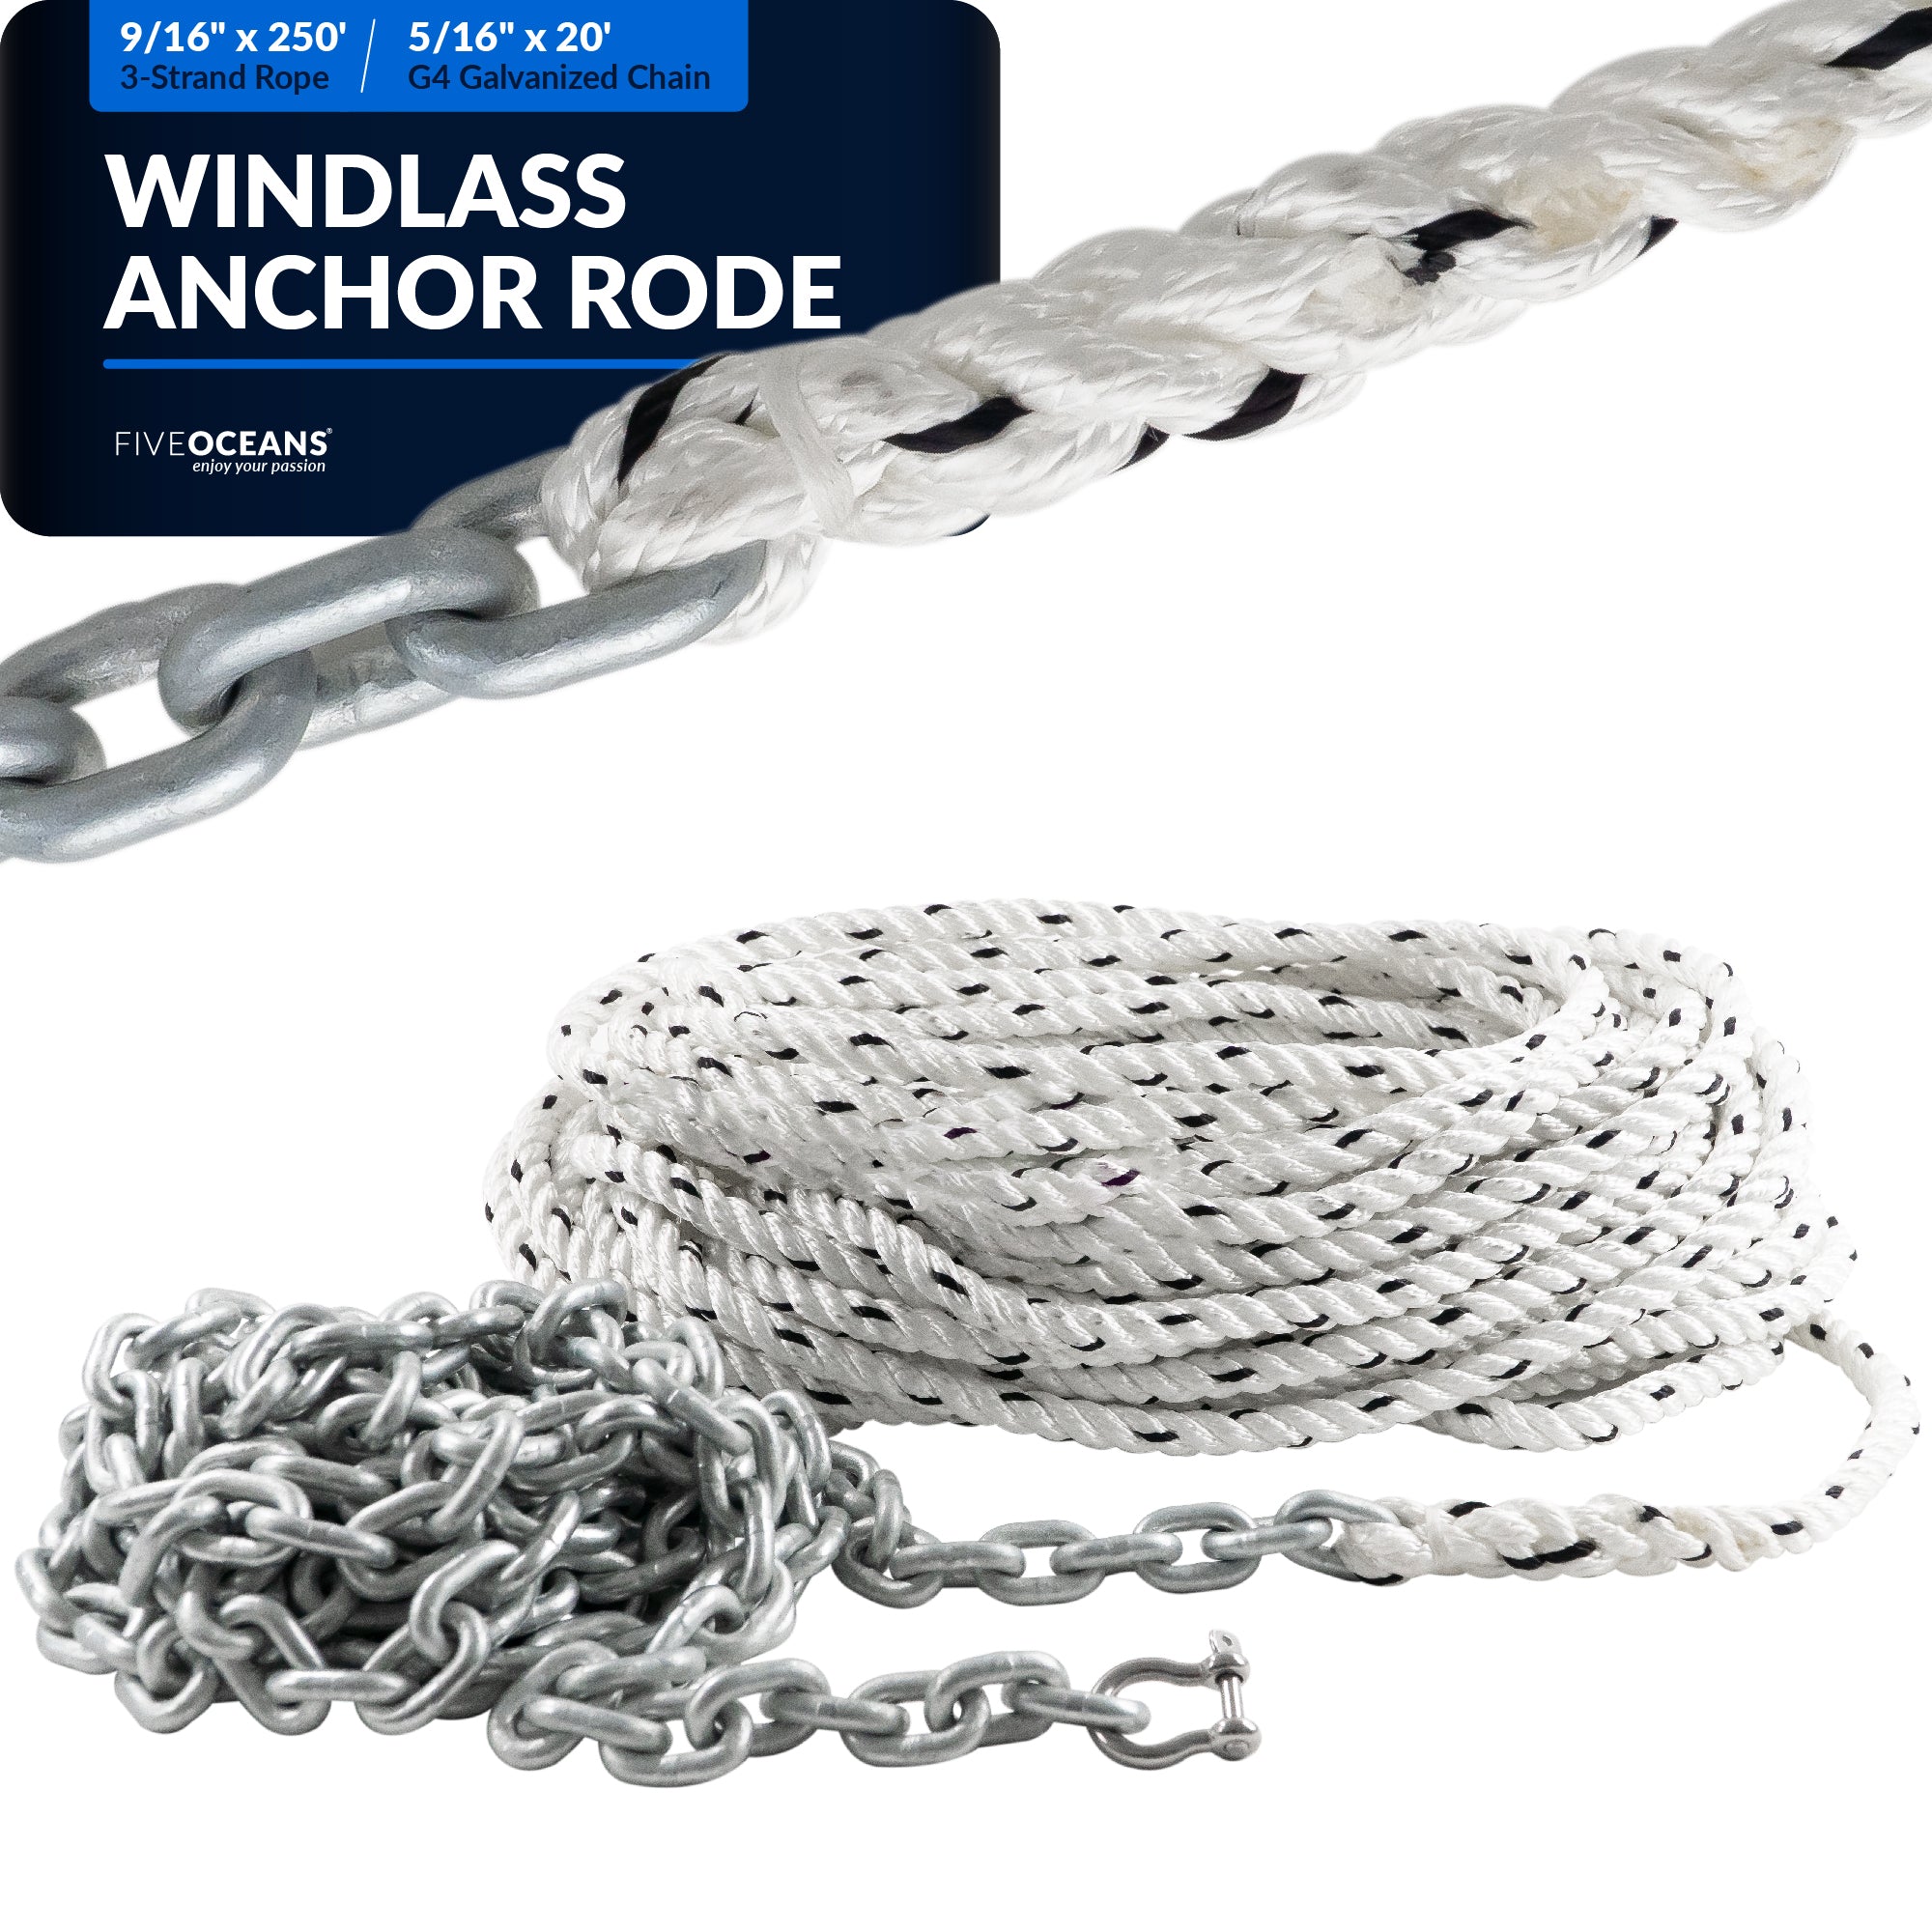 Windlass Anchor Rode, 9/16" x 250' Nylon 3-Strand Rope - 5/16" x 20' G4 Hot-Dipped Galvanized Steel Chain - FO4289